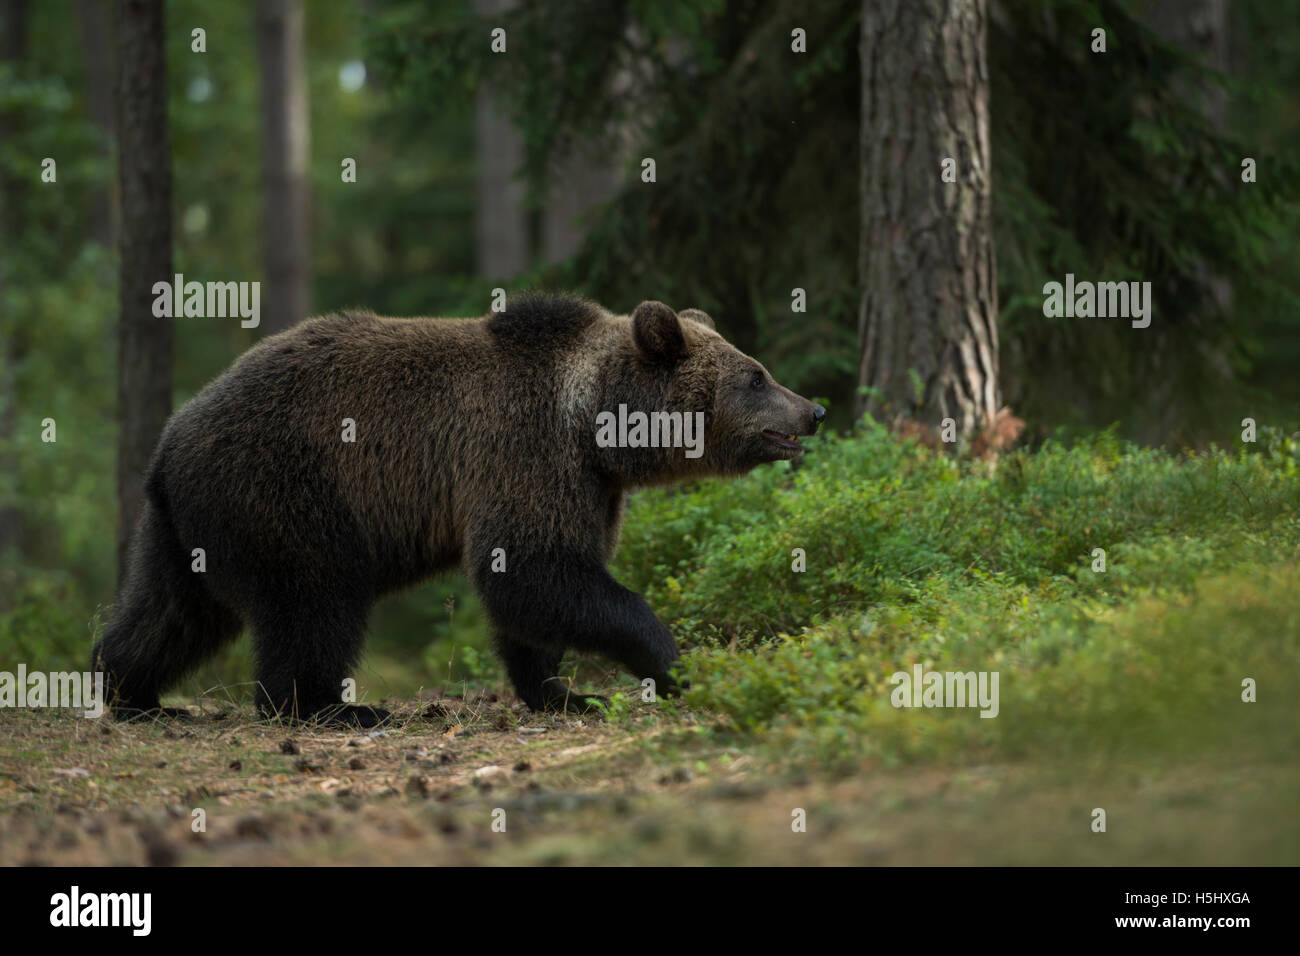 Oso Pardo europeo / Europaeischer Braunbaer ( Ursus arctos ), jóvenes crecidos, caminar a través de la espesura de un bosque de pinos Foto de stock